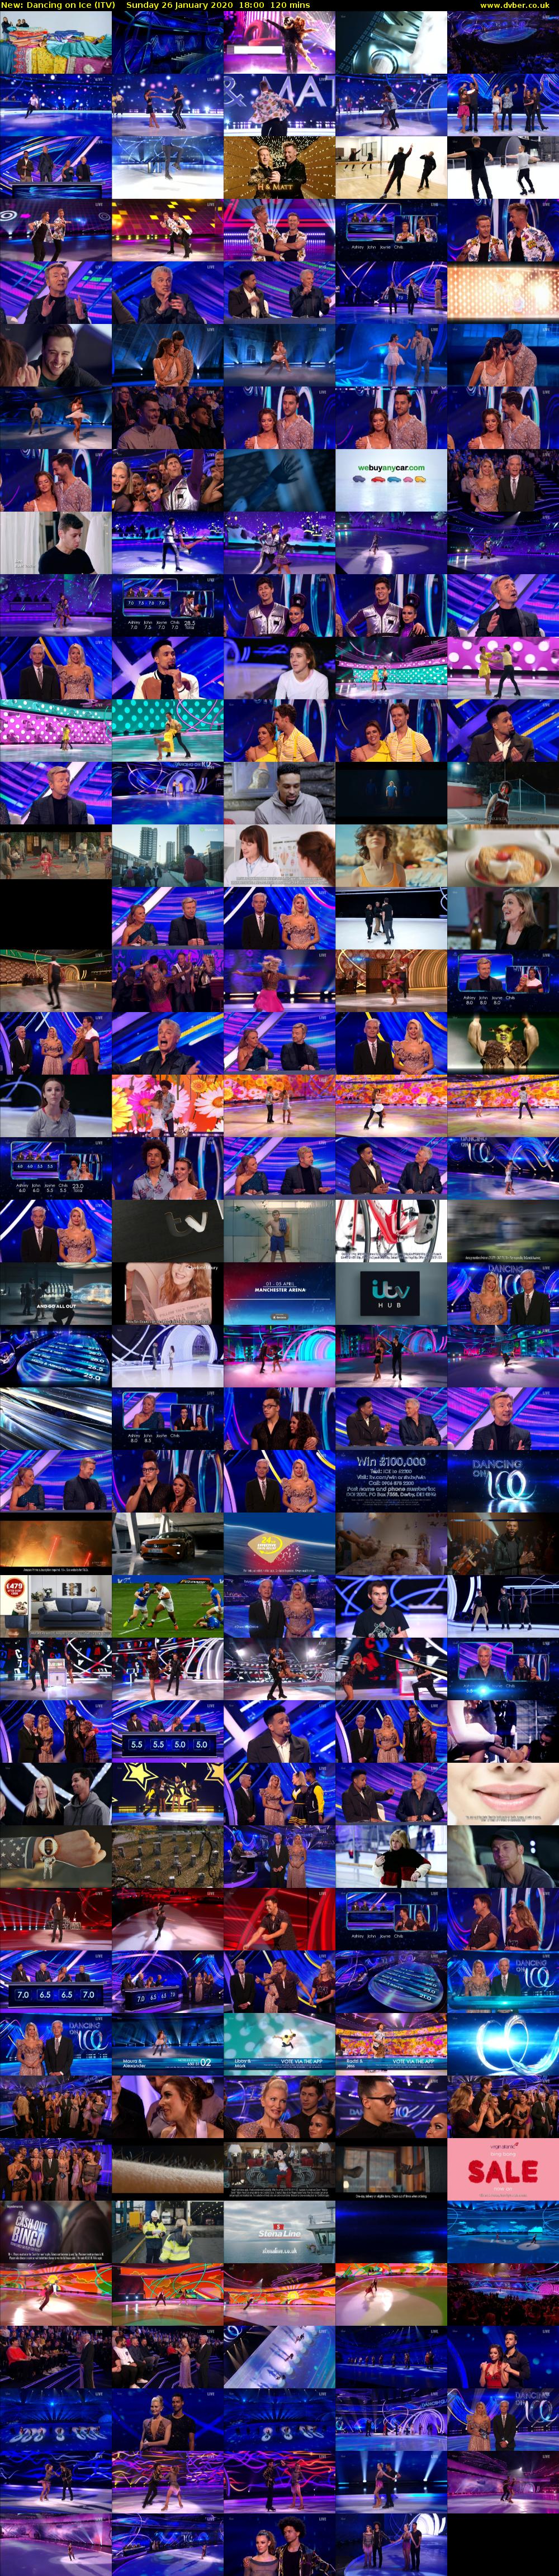 Dancing on Ice (ITV) Sunday 26 January 2020 18:00 - 20:00